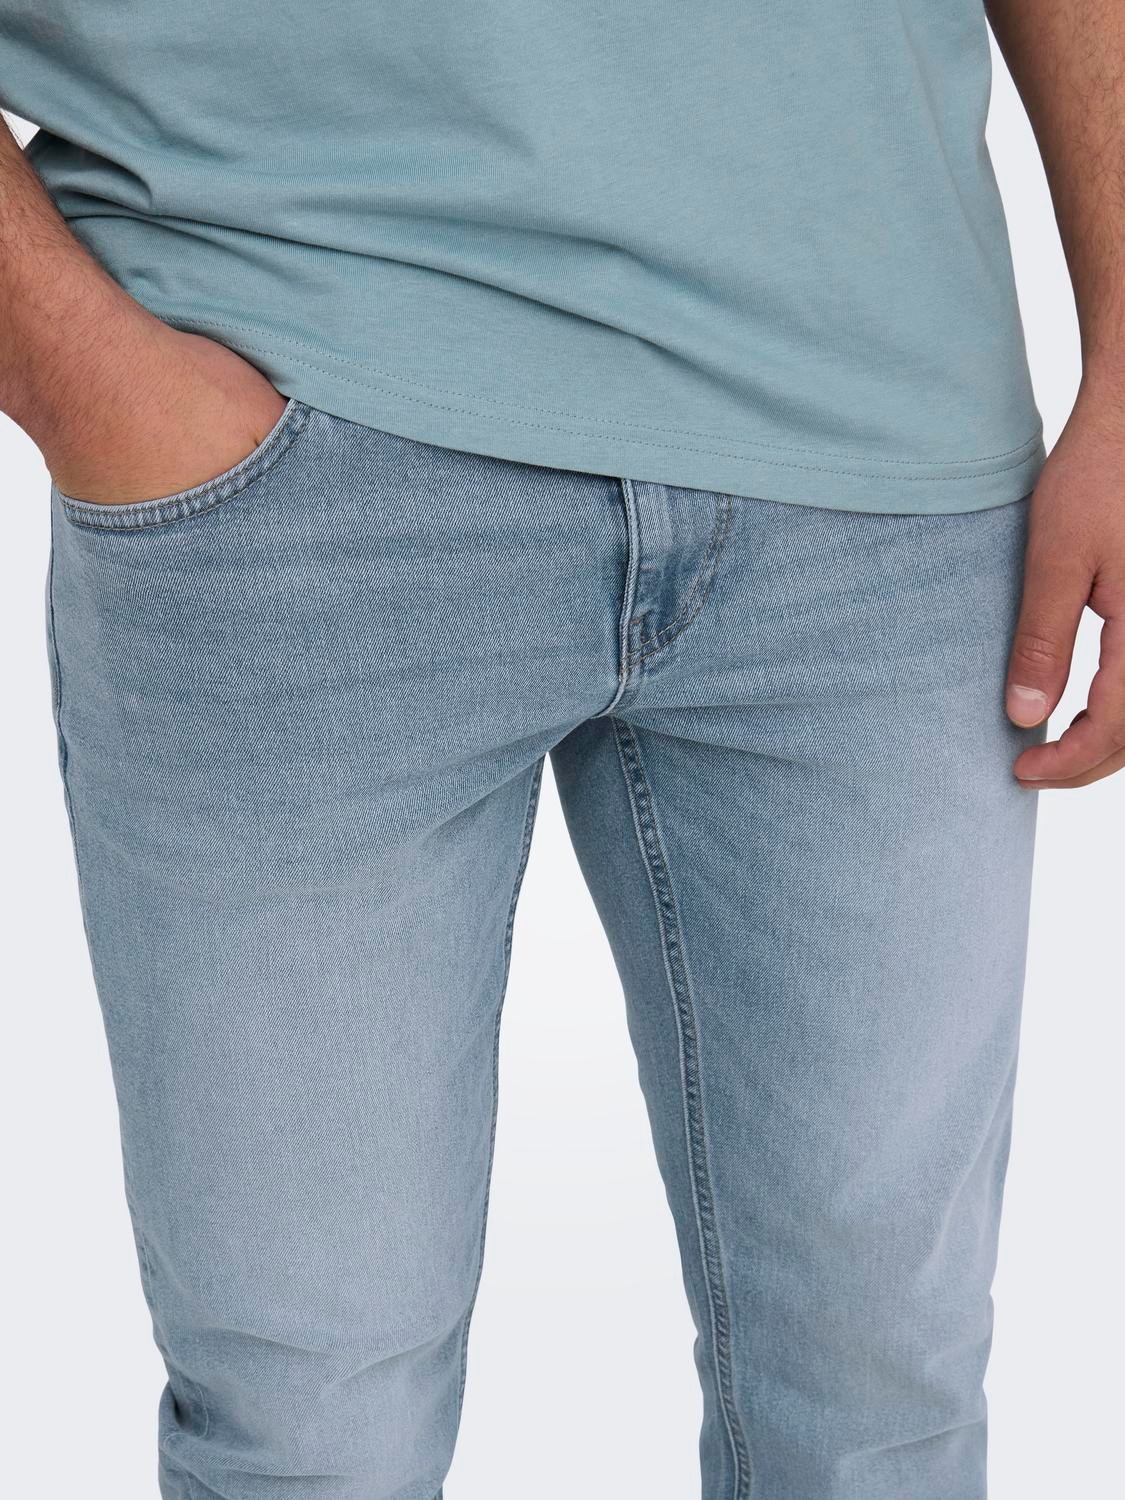 ONLY & SONS ONSLoom Slim Jeans -Light Blue Denim - 22027992